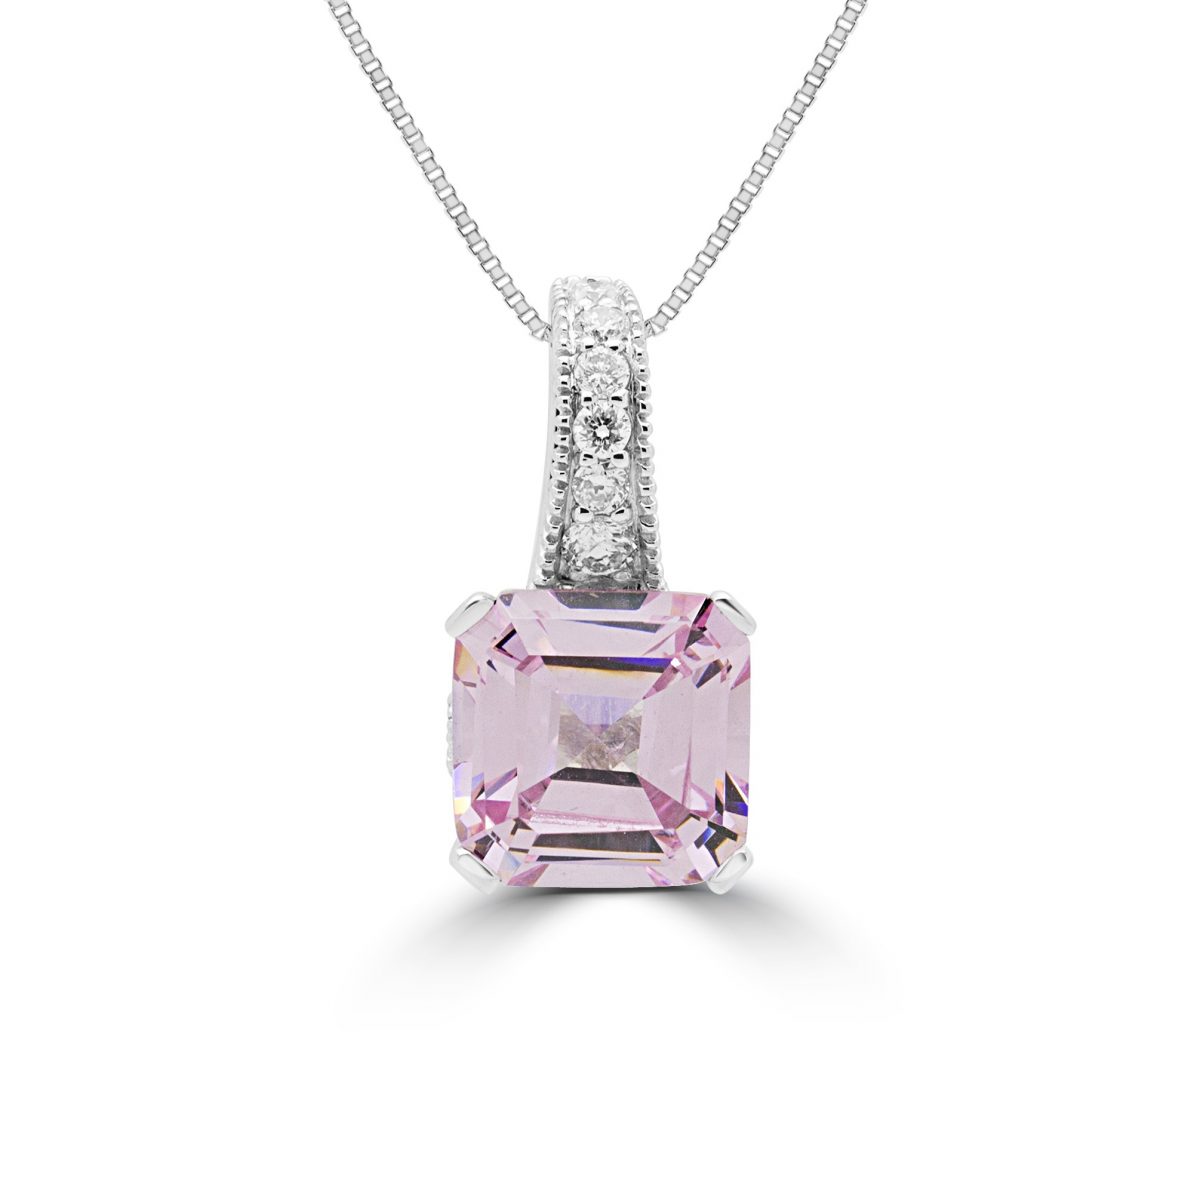 Diamond & fancy pink Cubic Zirconia pendant & necklace in 14k gold